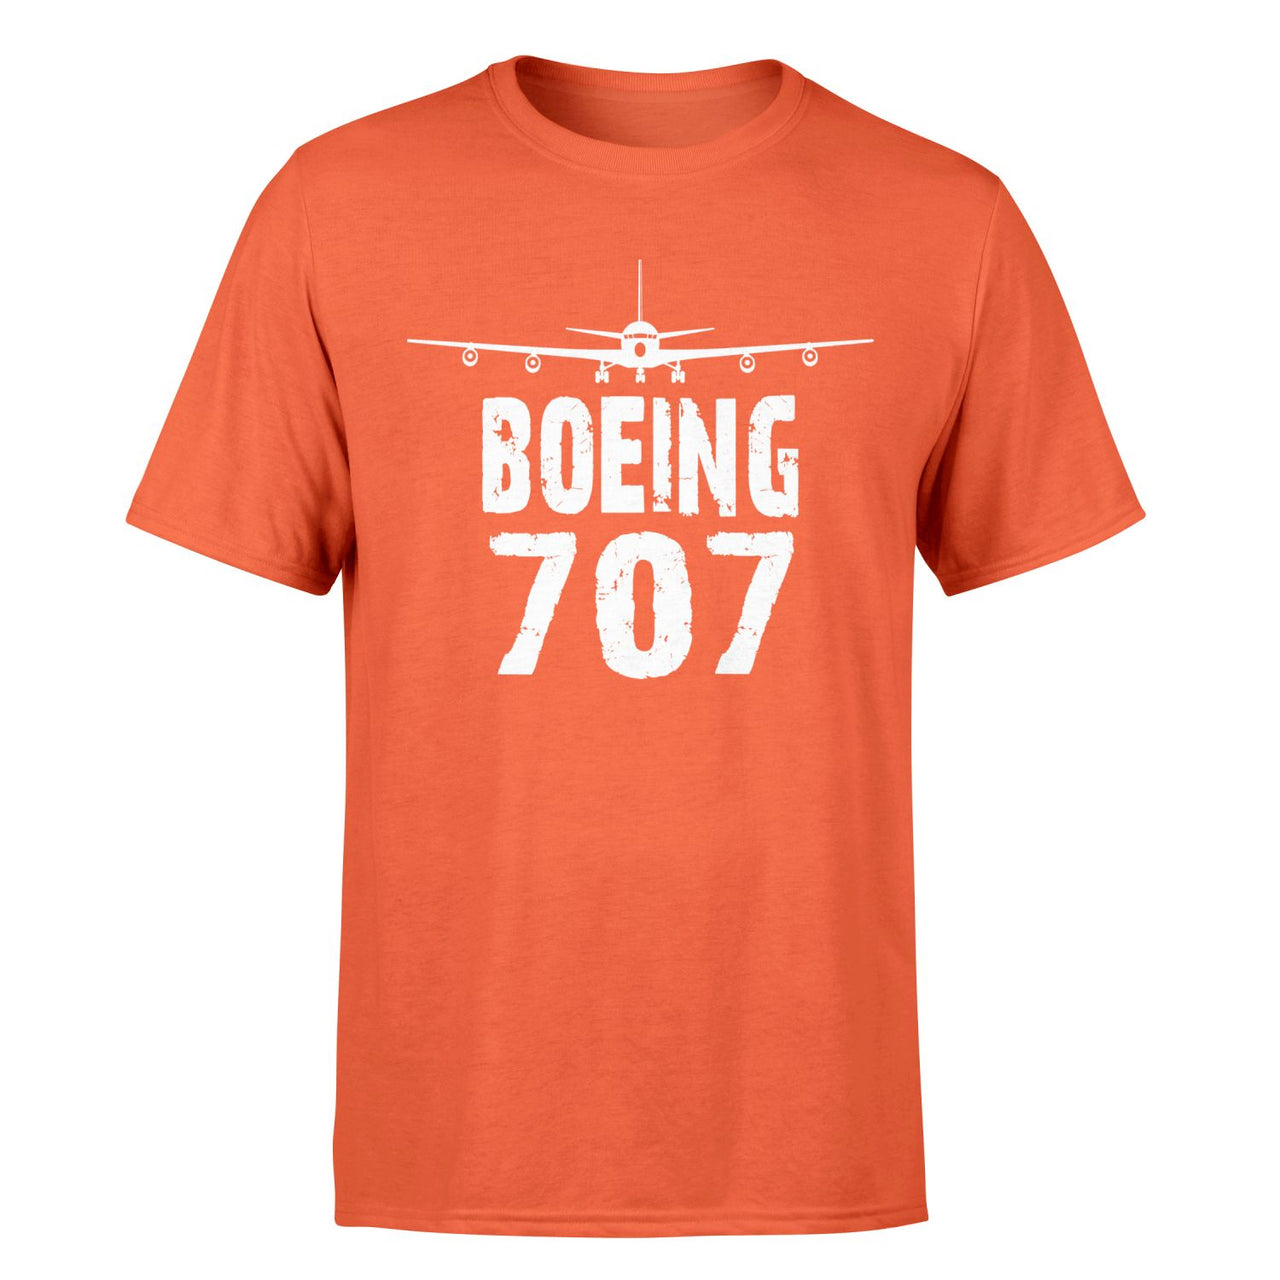 Boeing 707 & Plane Designed T-Shirts